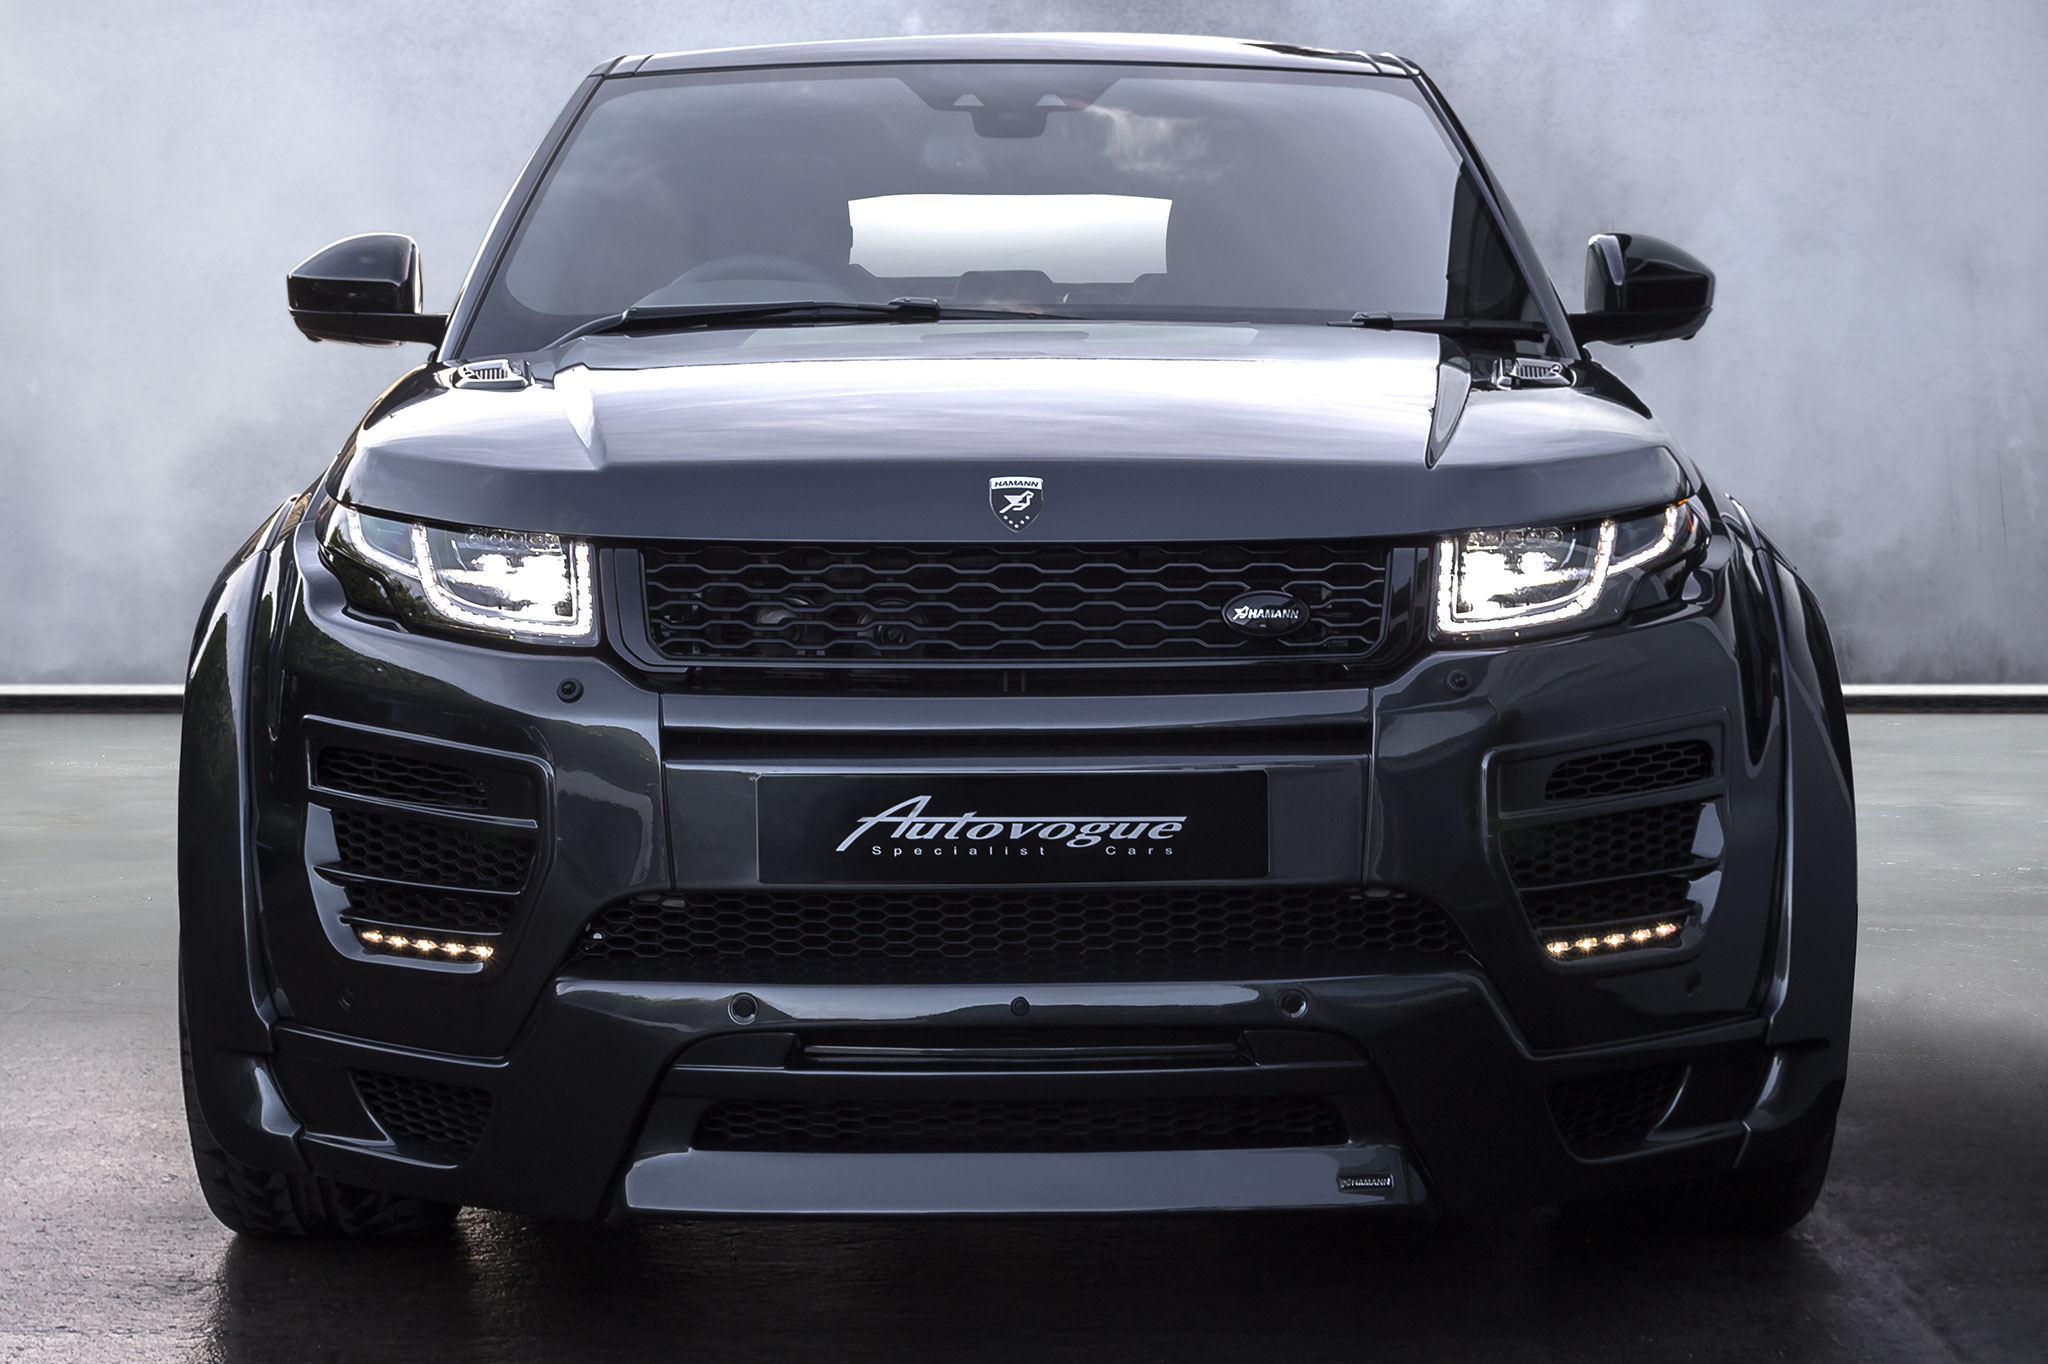 Hamann Widebody Kit Set For Land Rover Range Rover Evoque Køb Med